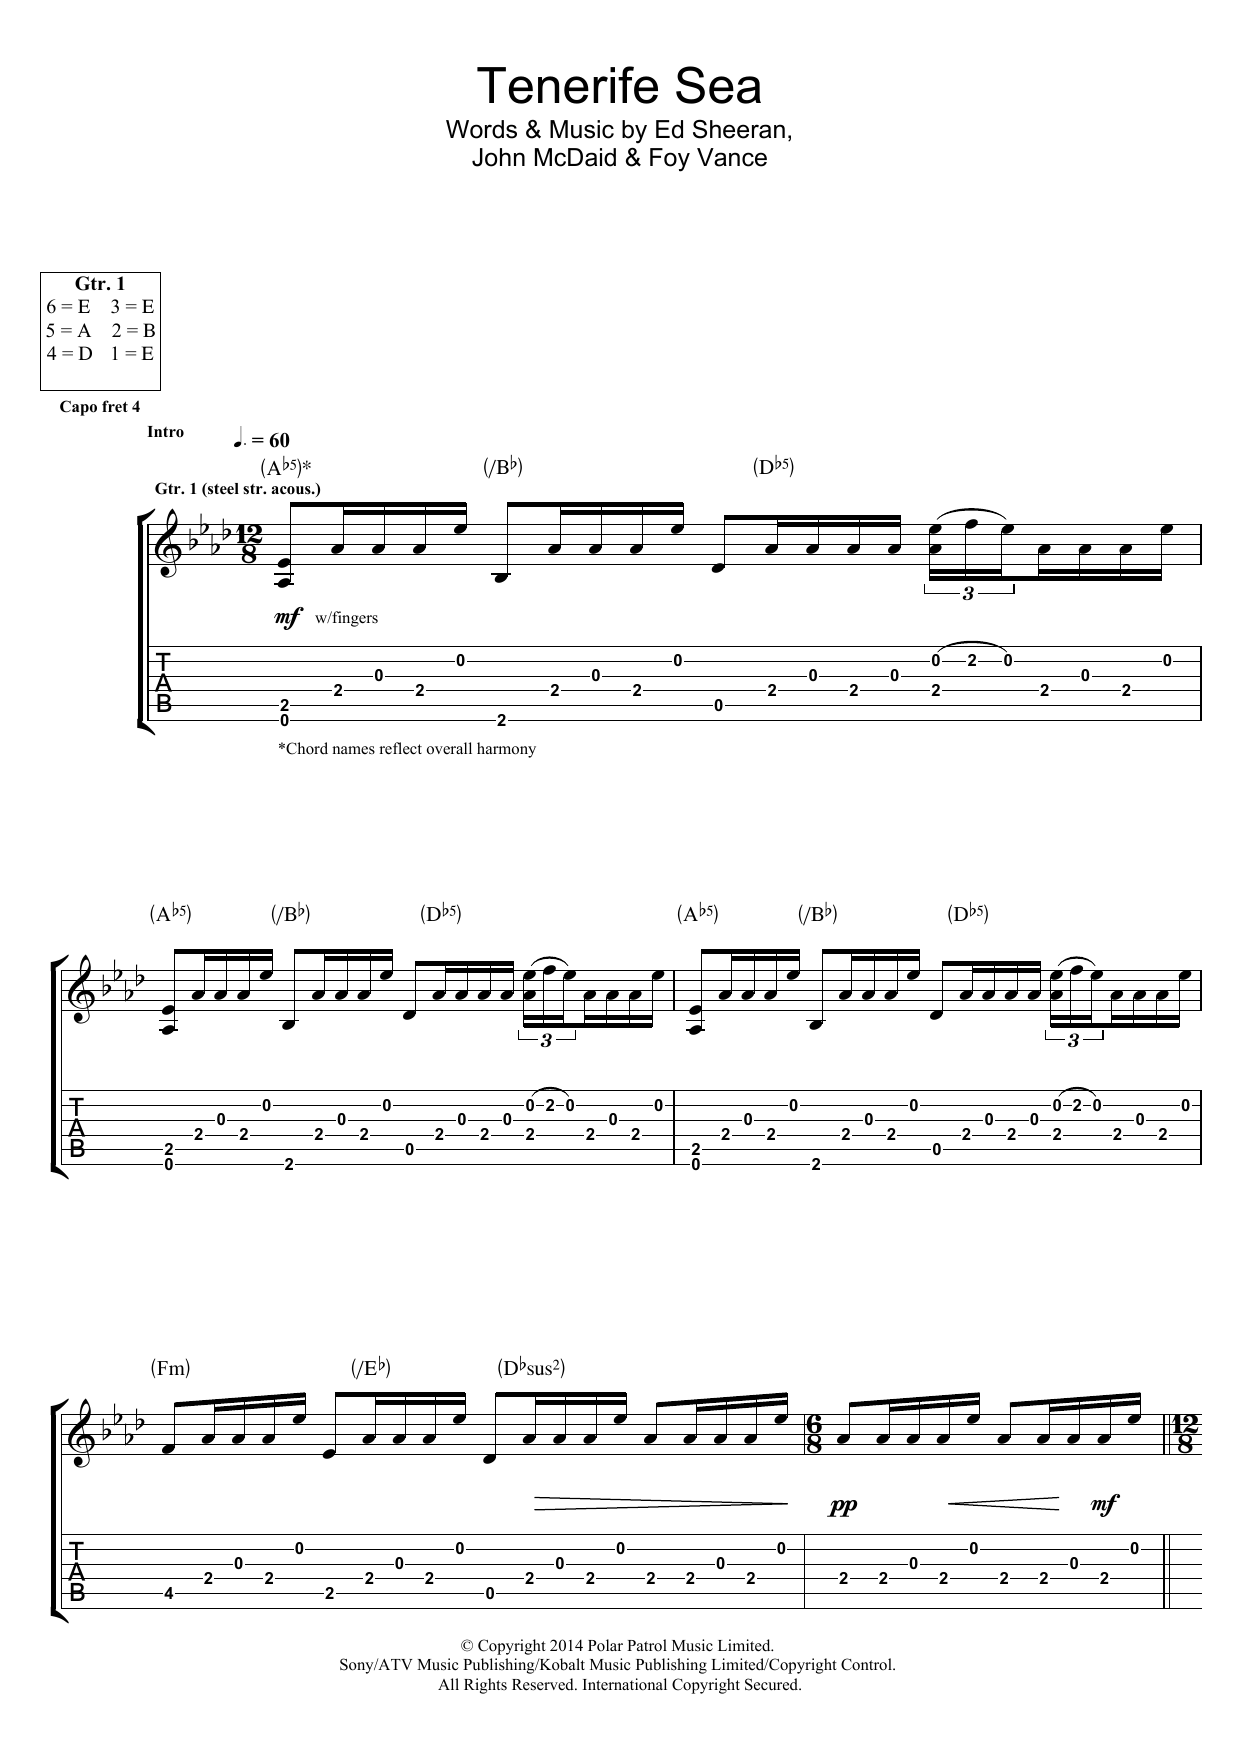 Download Ed Sheeran Tenerife Sea Sheet Music and learn how to play Ukulele PDF digital score in minutes